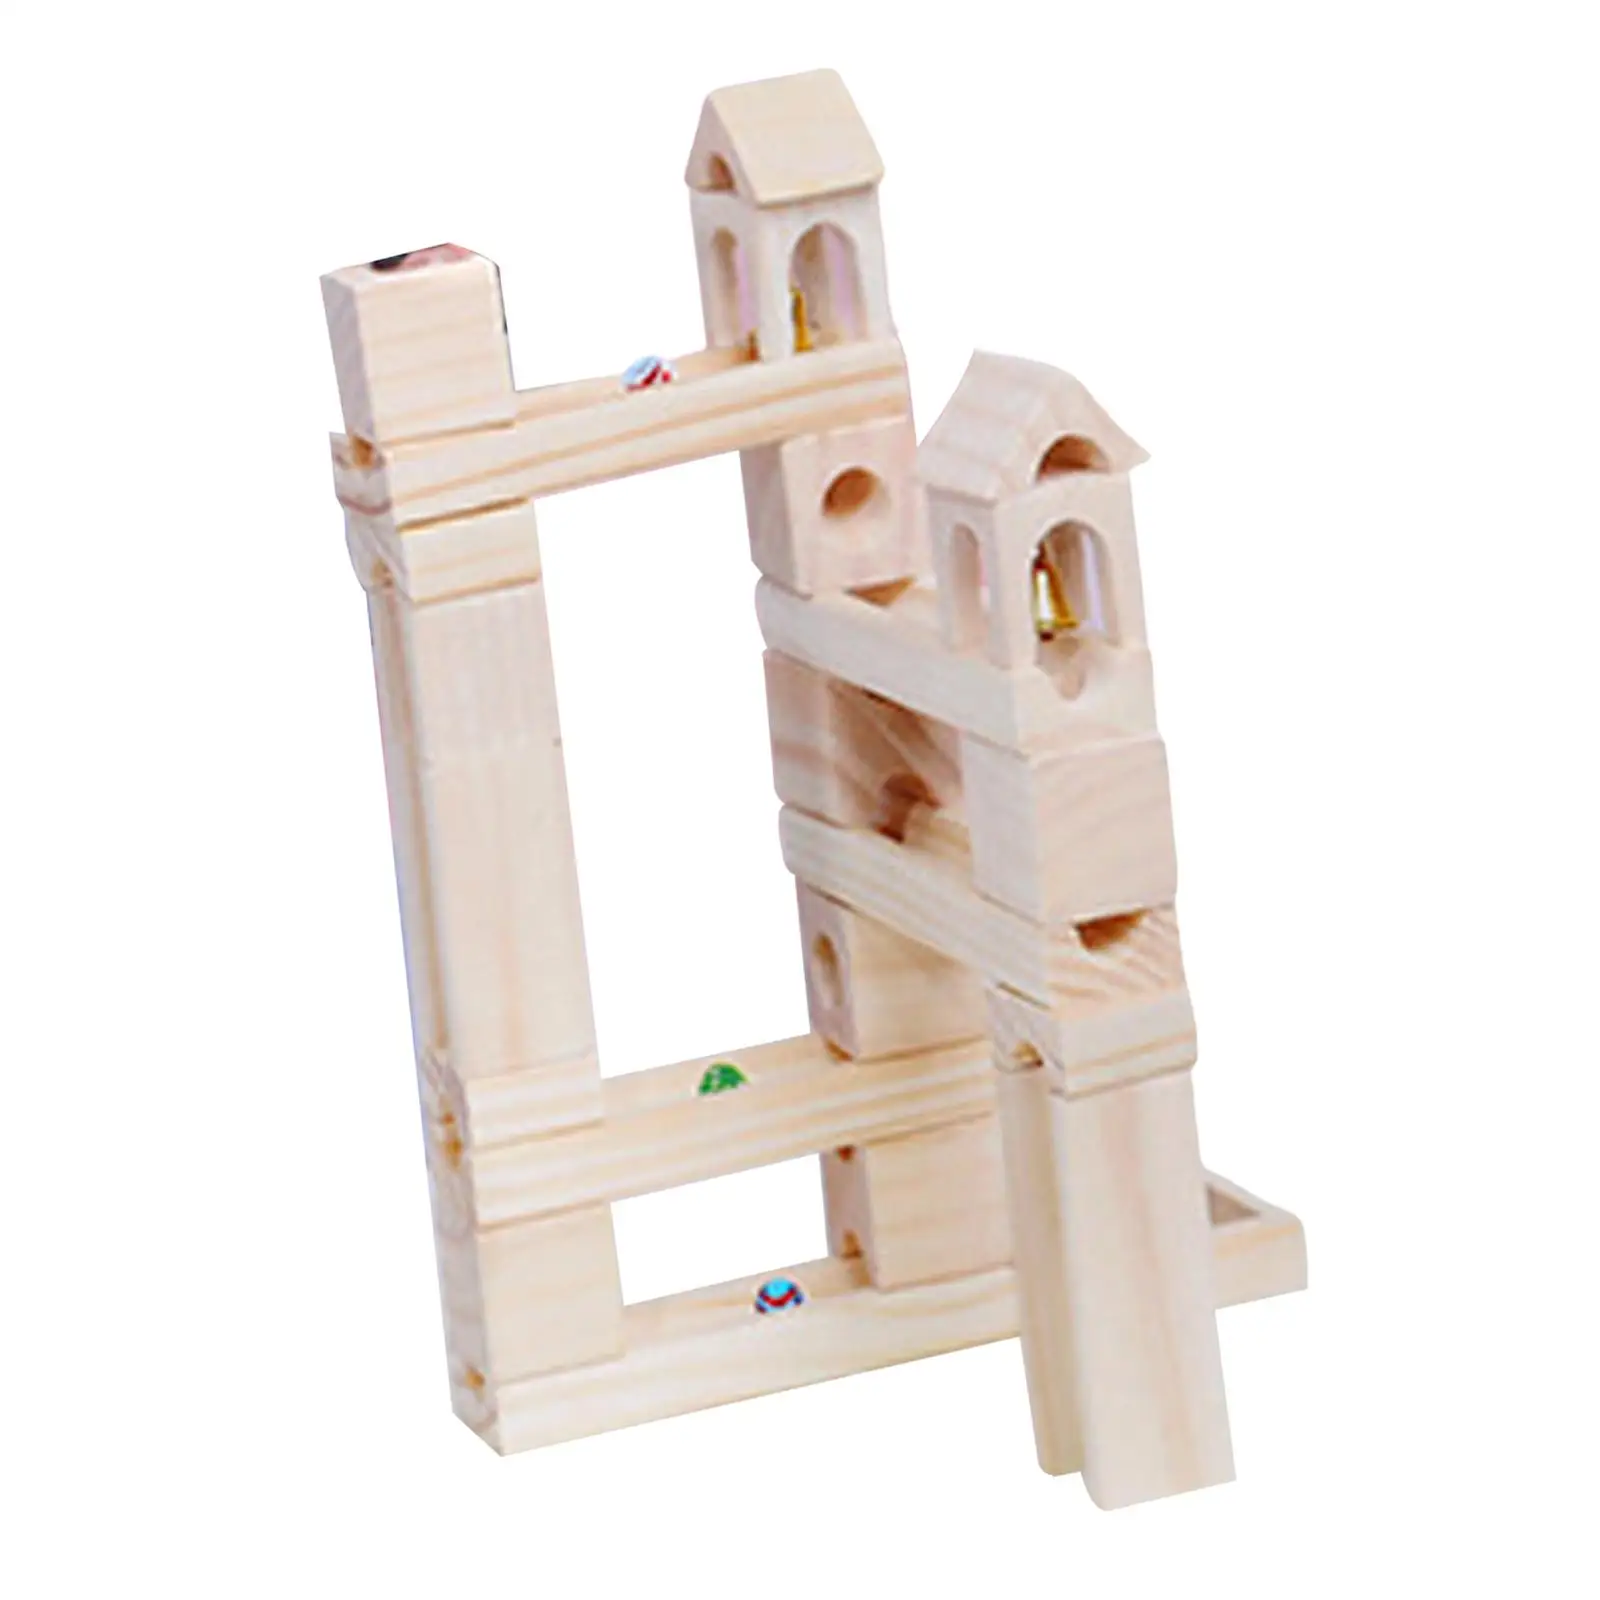 Wood Marble Run building blocks Marble Ramps Track Blocks Game for Preschool